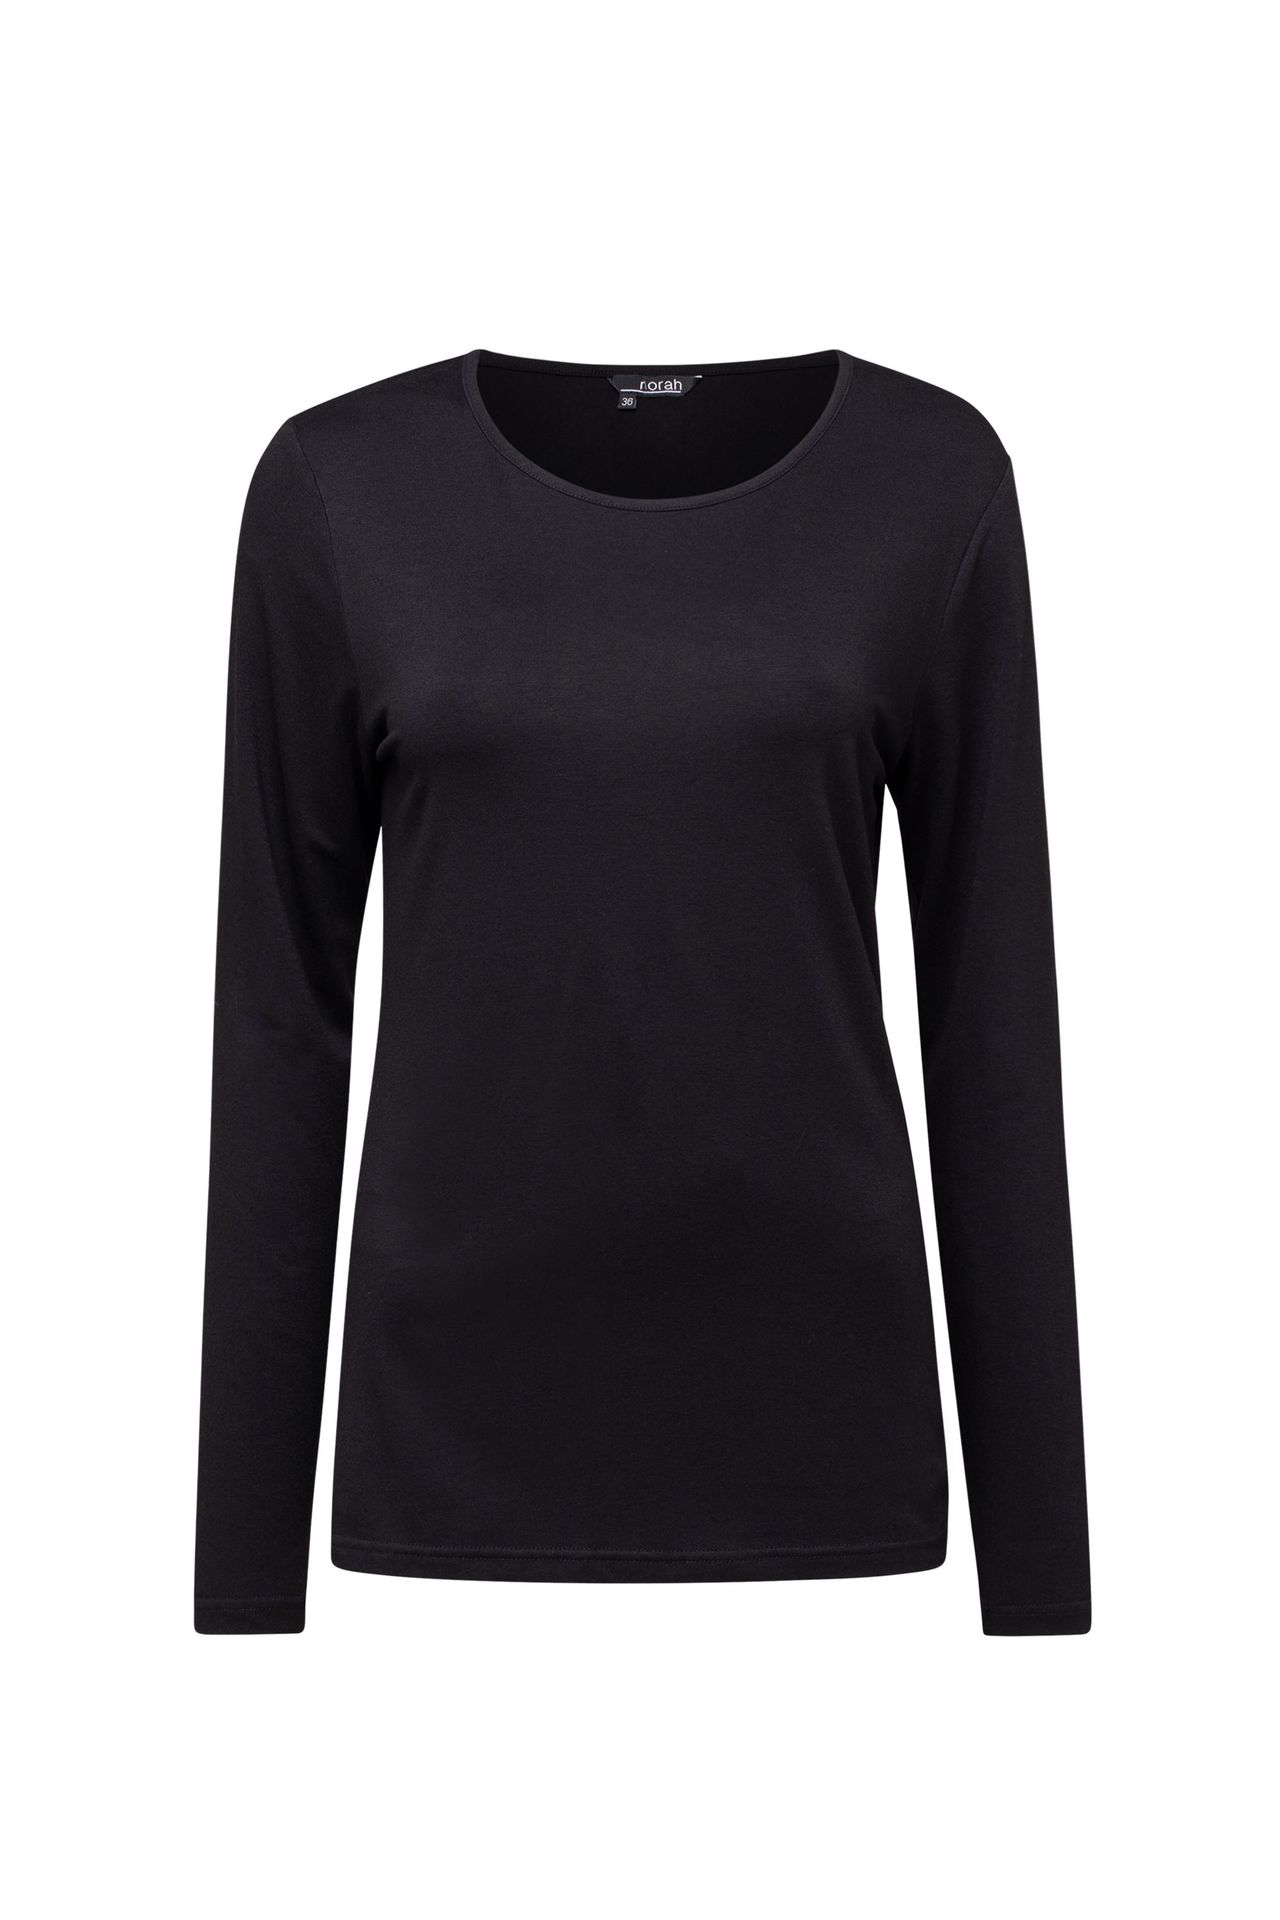 Norah Shirt zwart black 212206-001